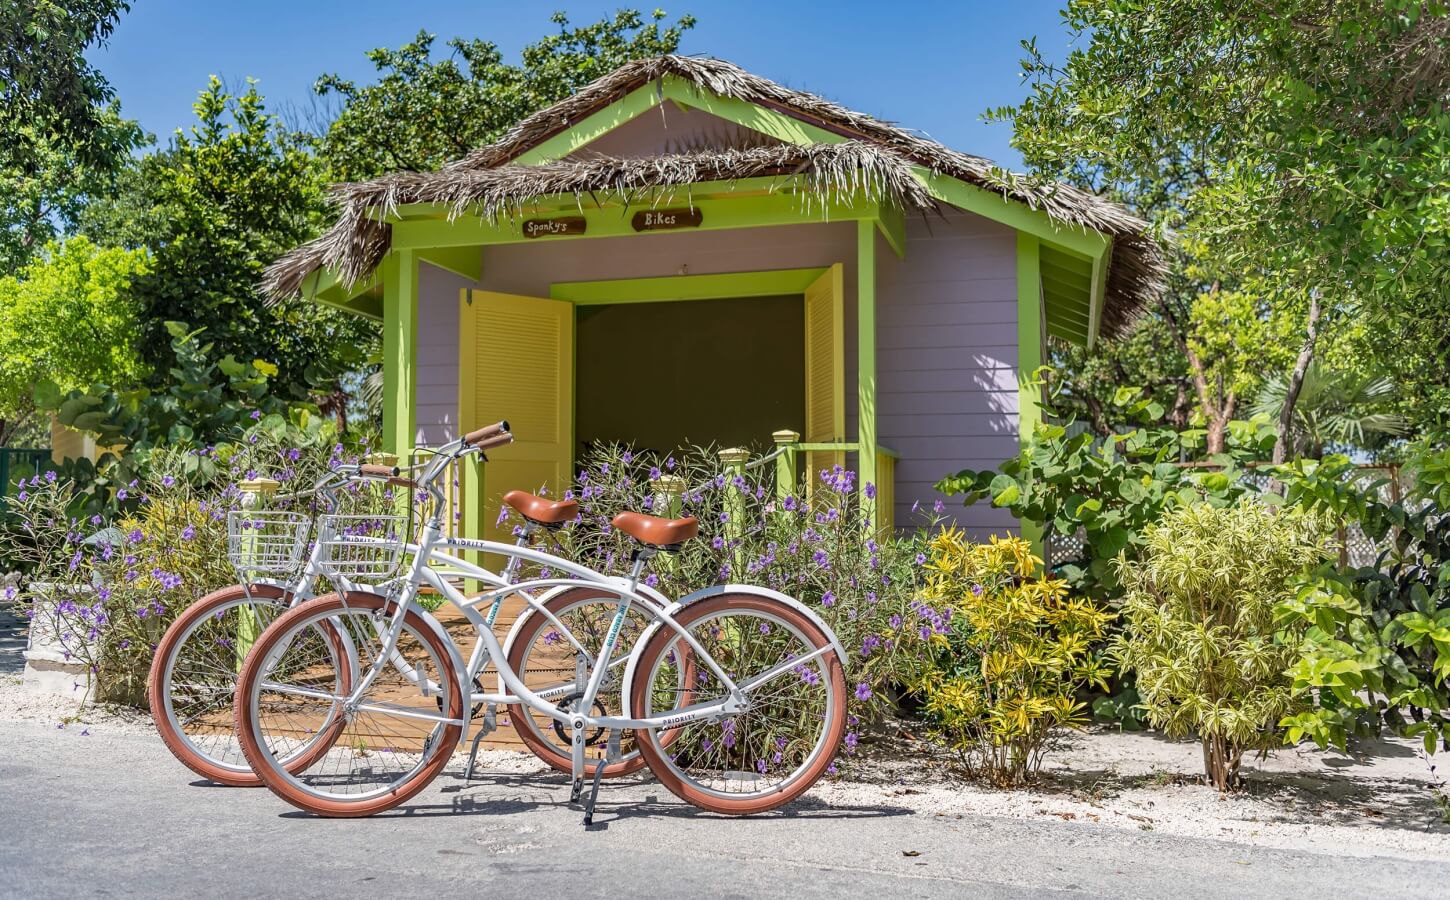 Bike rental space at The Abaco Club